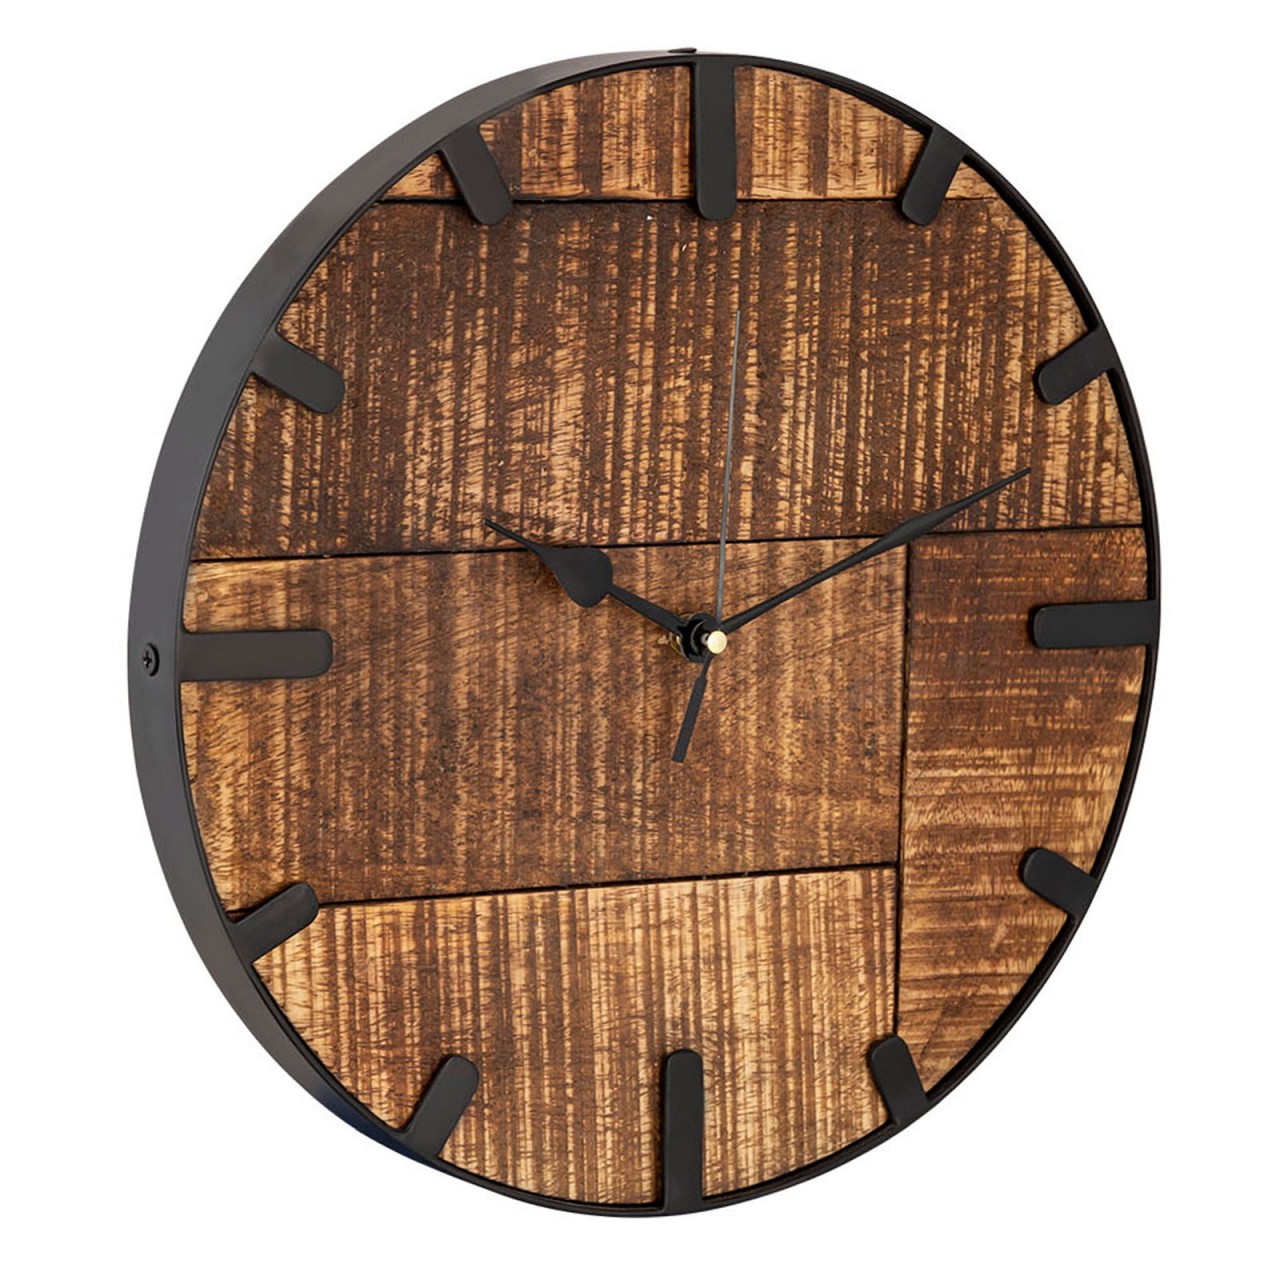 Uhr Holz ø 30 cm Wanduhr Wohnzimmeruhr modern rund aus Holz Vintage lautlos Mangoholz massiv